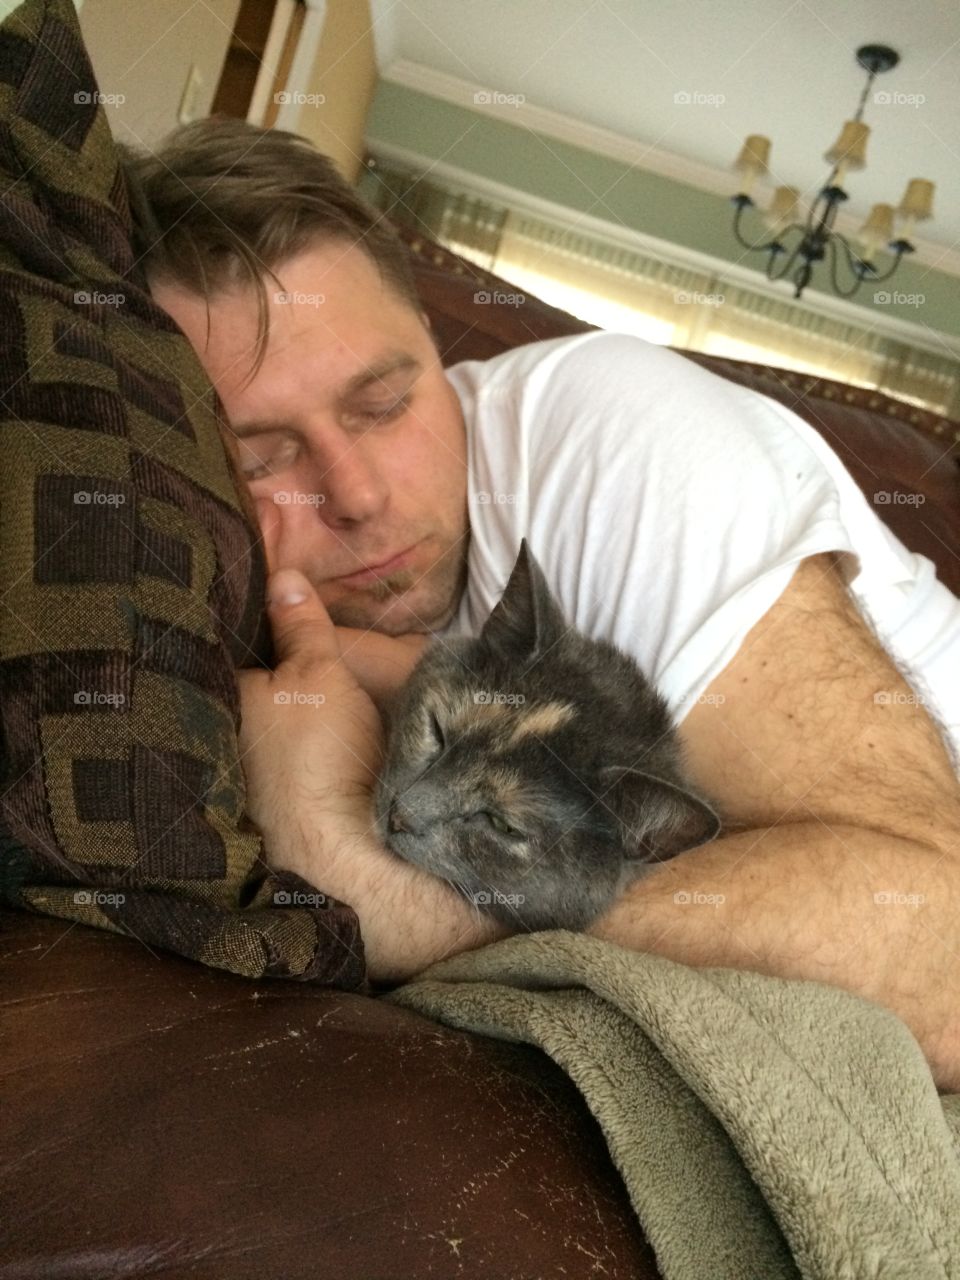 Sleeping with pet